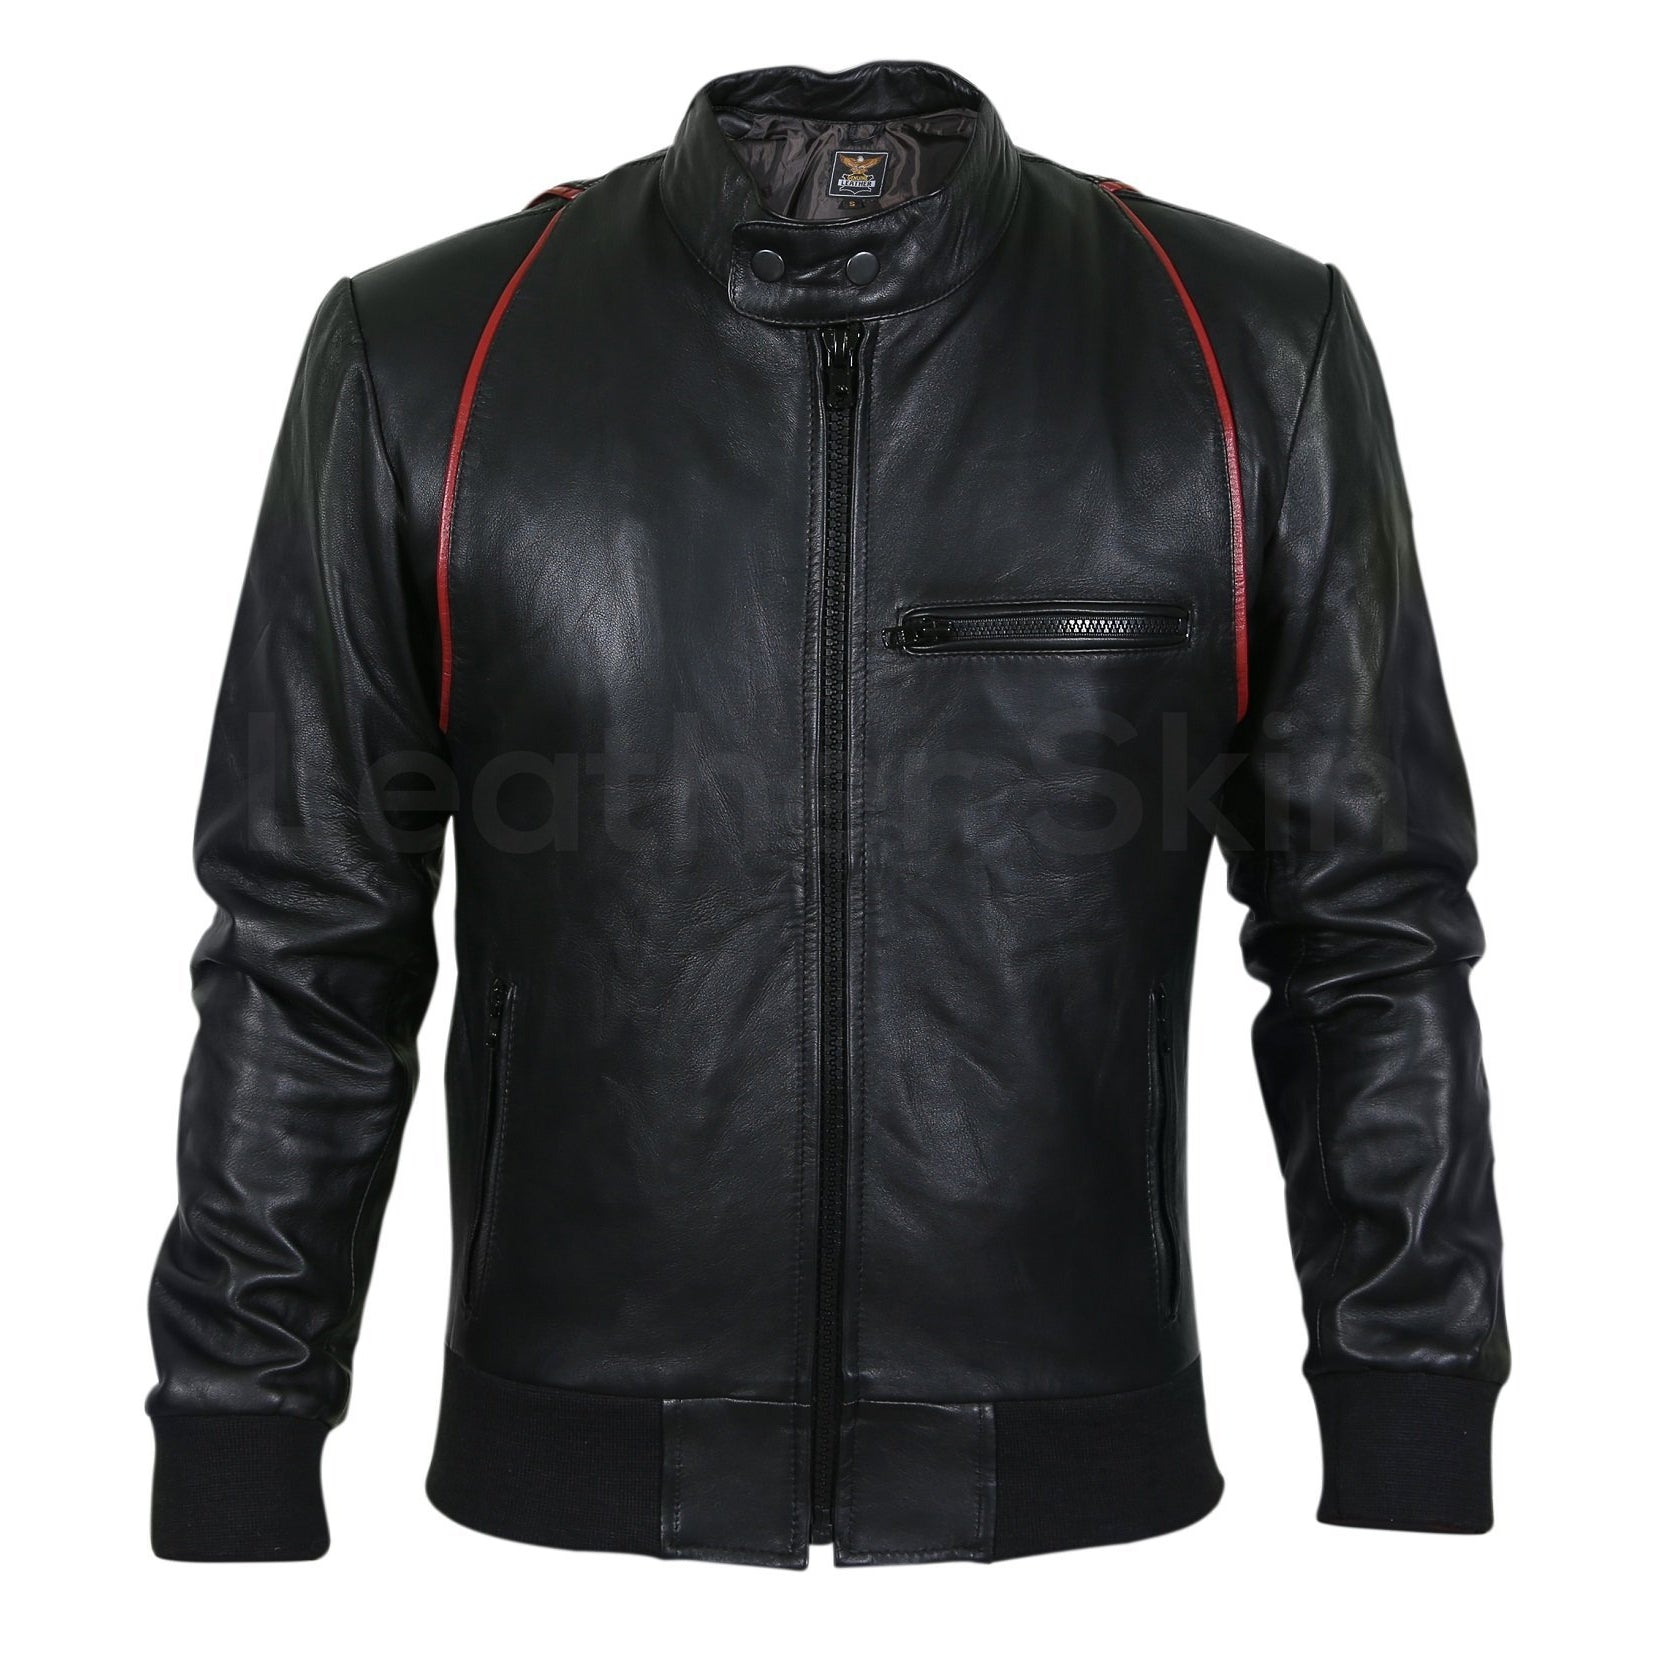 Red Leather Jacket for Women Moto Fashion - Genuine Leather Jacket